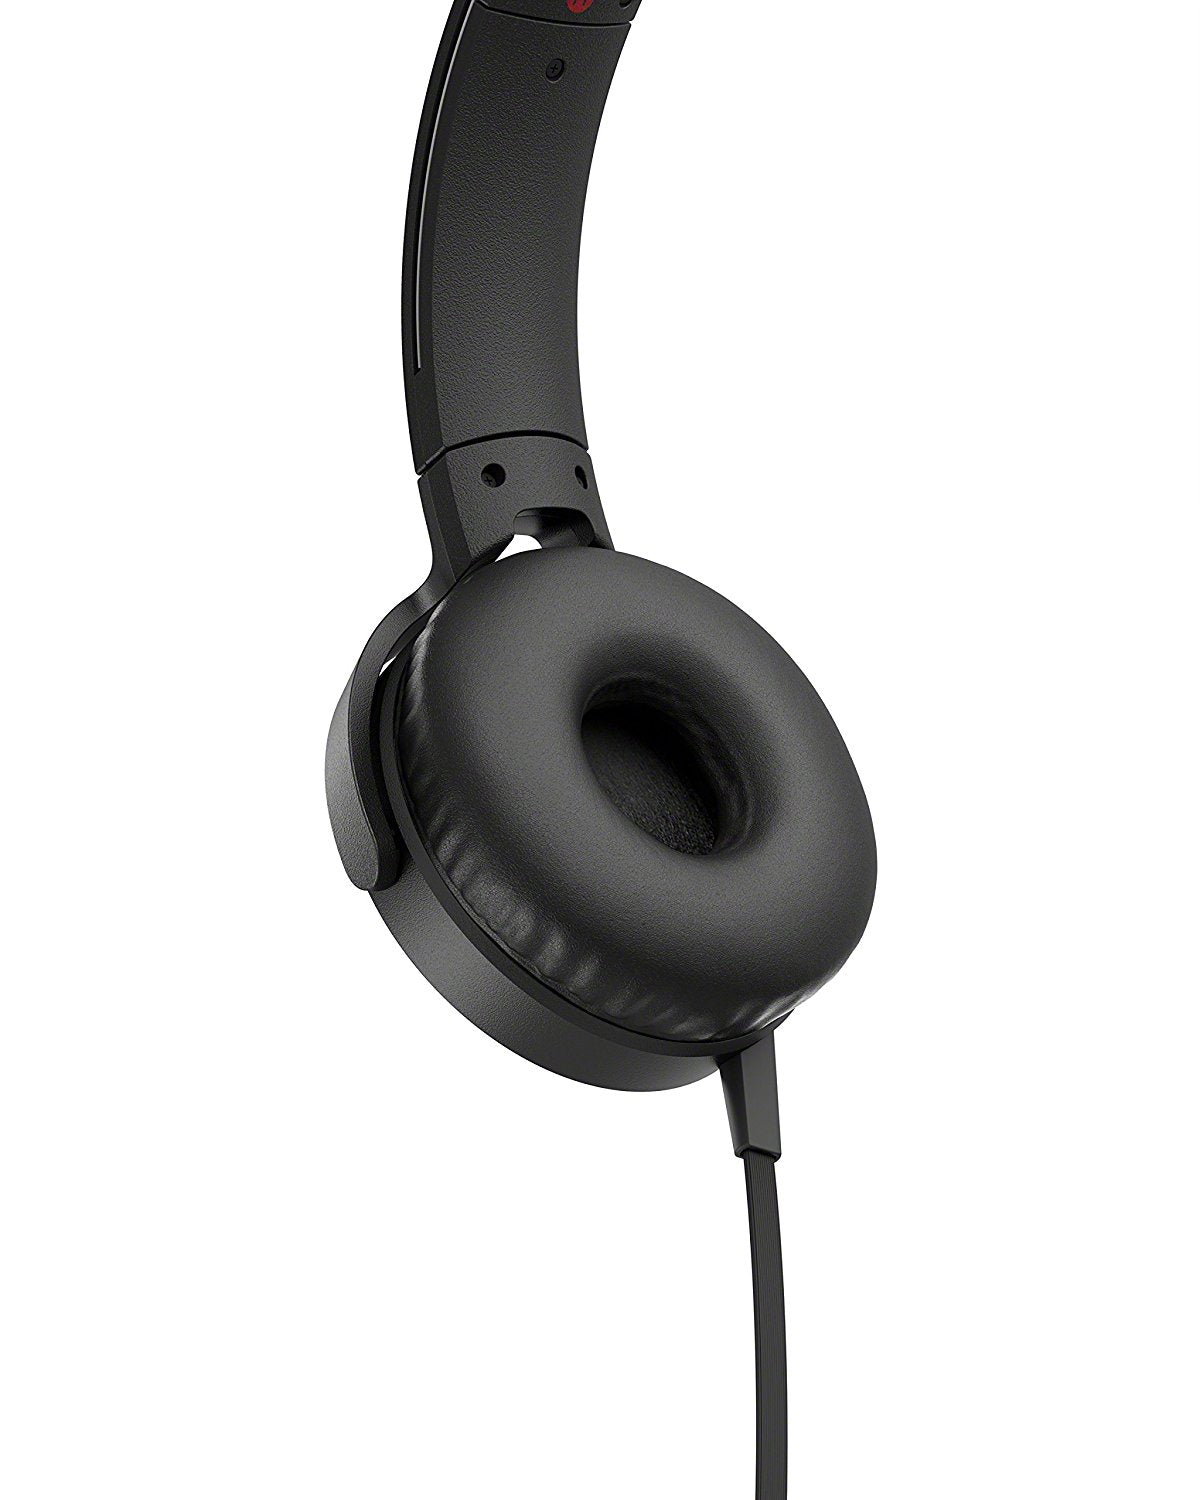 Sony MDR-XB550AP - Headphones with mic - on-ear - 3.5 mm jack - black